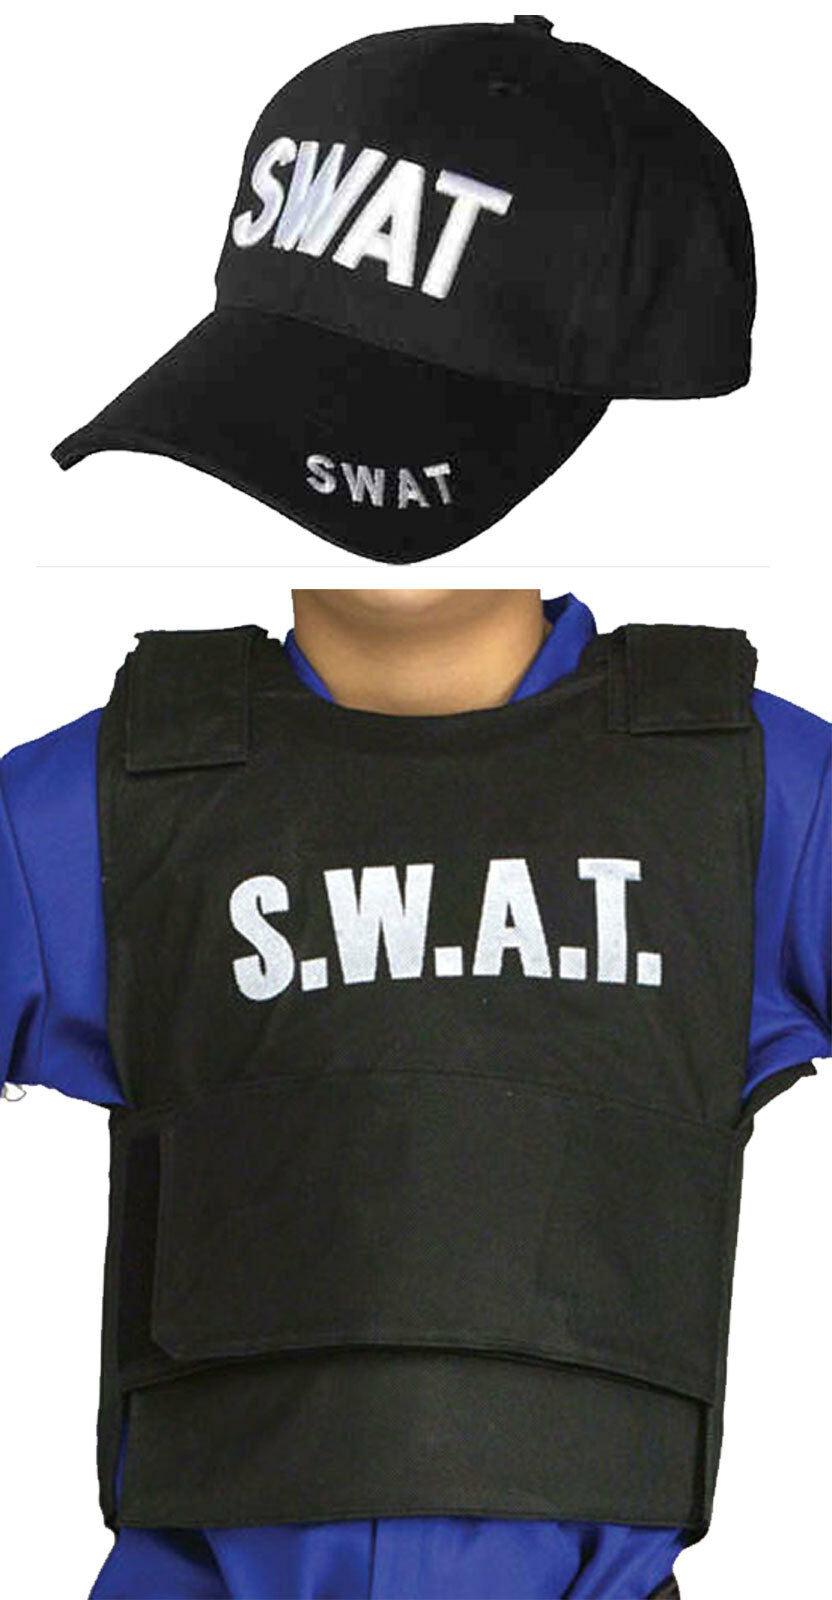 KIDS CHILDRENS SWAT TEAM VEST & HAT SET POLICE FBI MILITARY STYLE FANCY DRESS - Labreeze